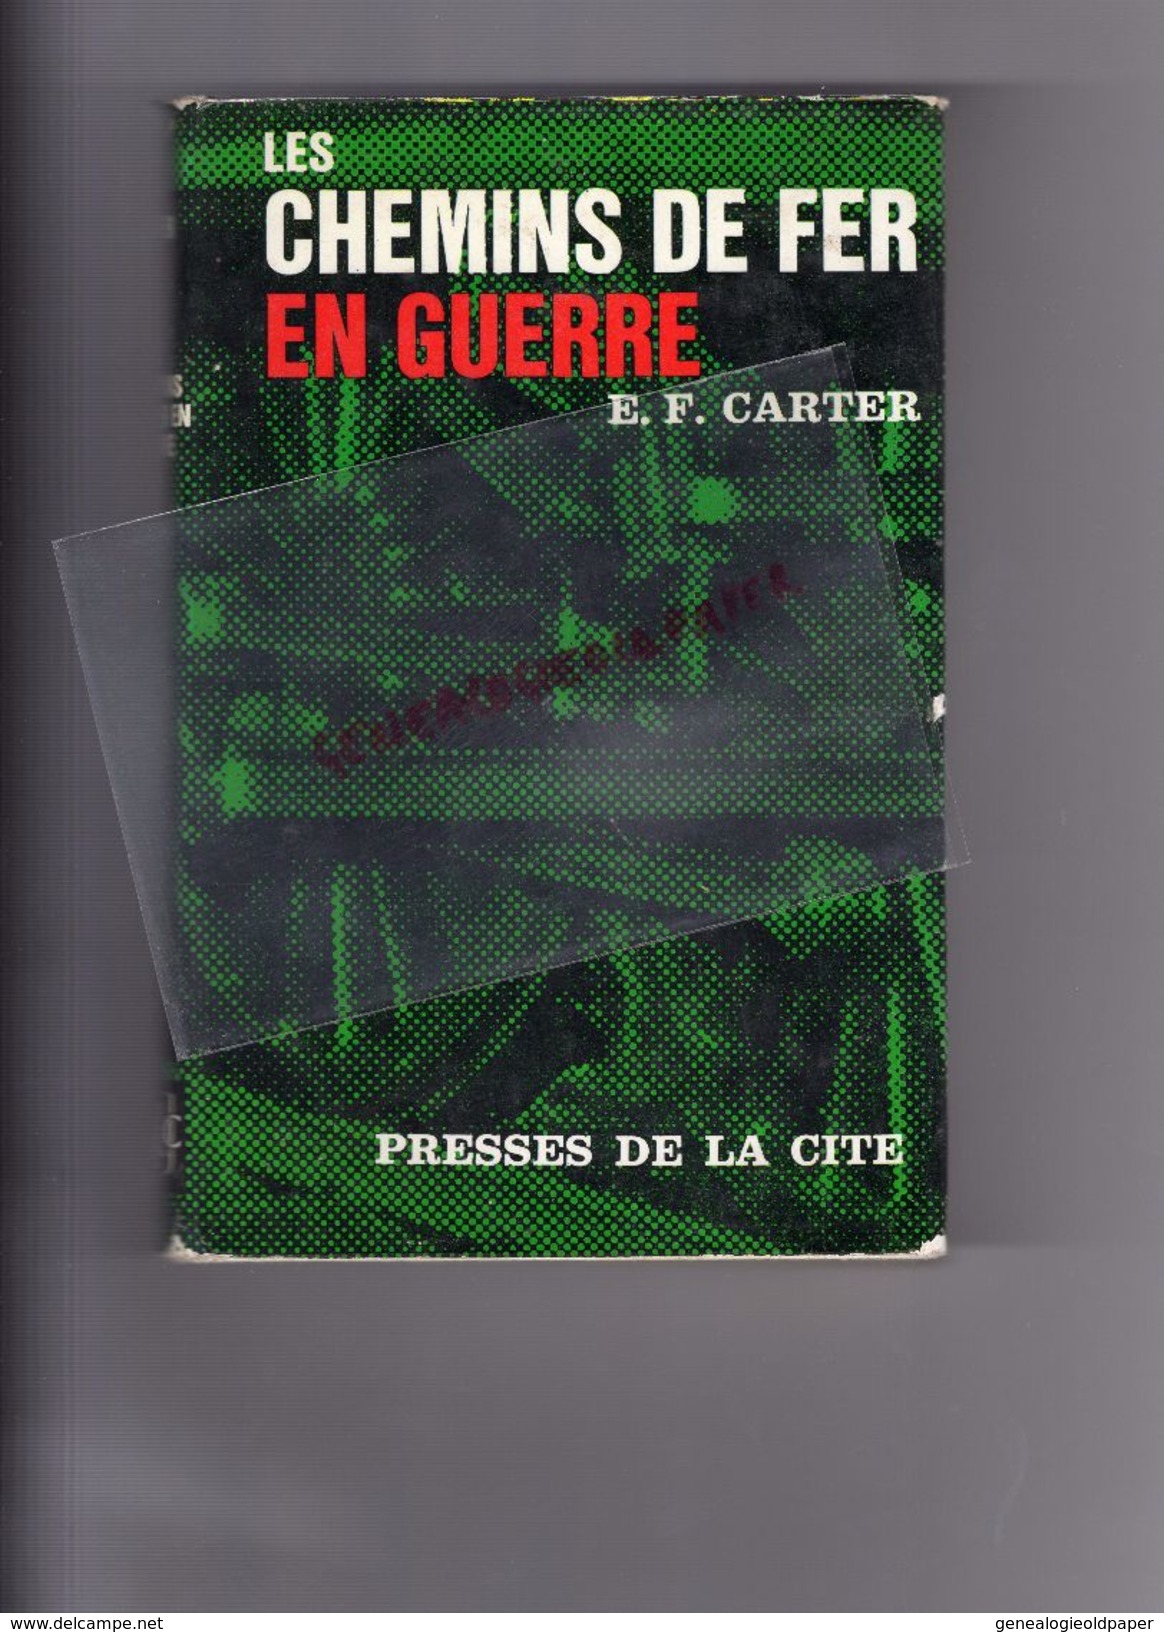 LES CHEMINS DE FER EN GUERRE-E.F. CARTER-PRESSES DE LA CITE-1973- SECESSION-SOUDAN GUERRE BOERS-14-18-ANGLETERRE-EGYPTE- - Ferrocarril & Tranvías